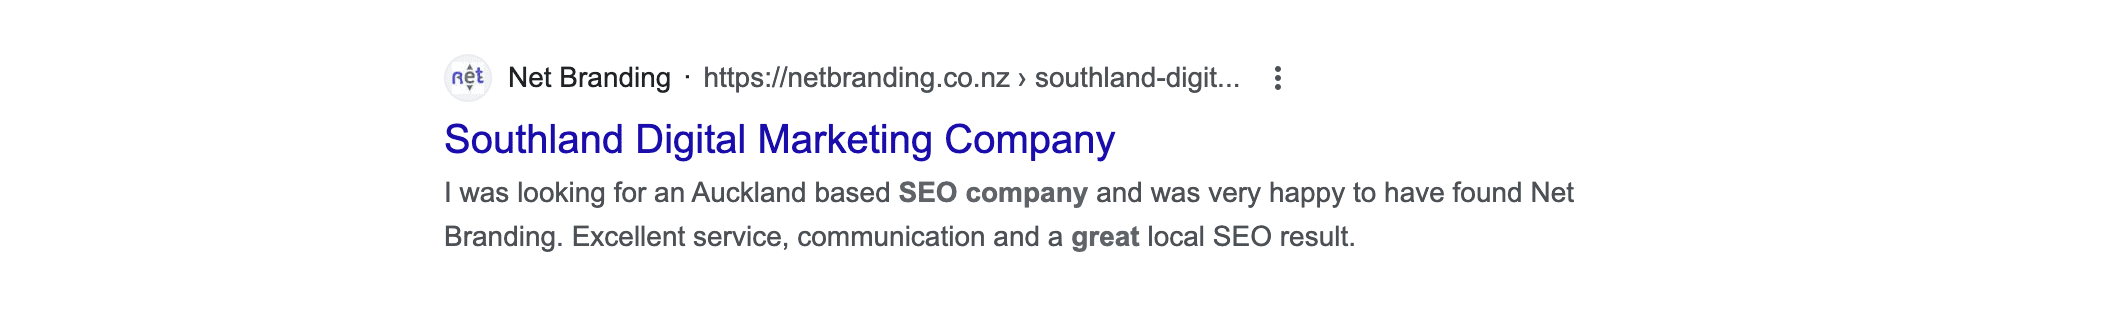 Best SEO Southland screen grab of Net Brandings Result